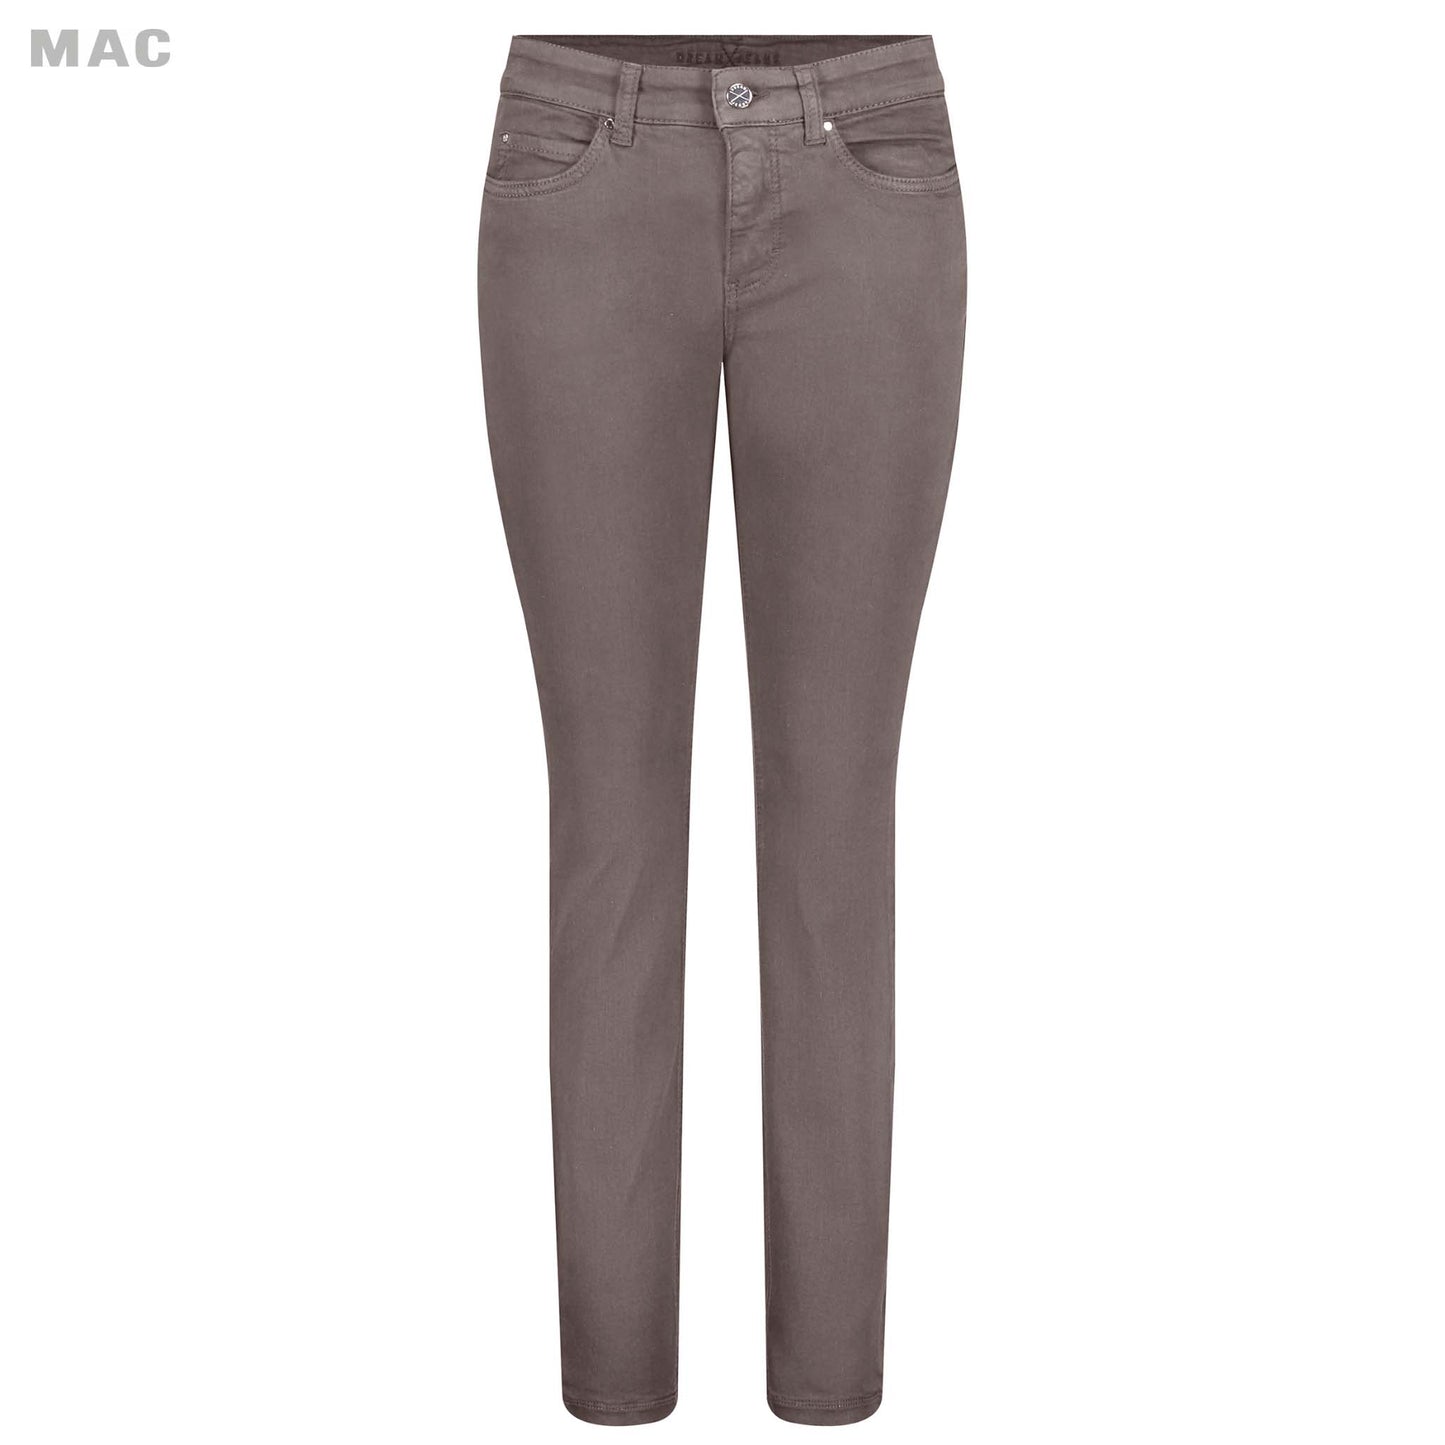 kleding lange vrouwen mac jeans dream skinny grey taupe